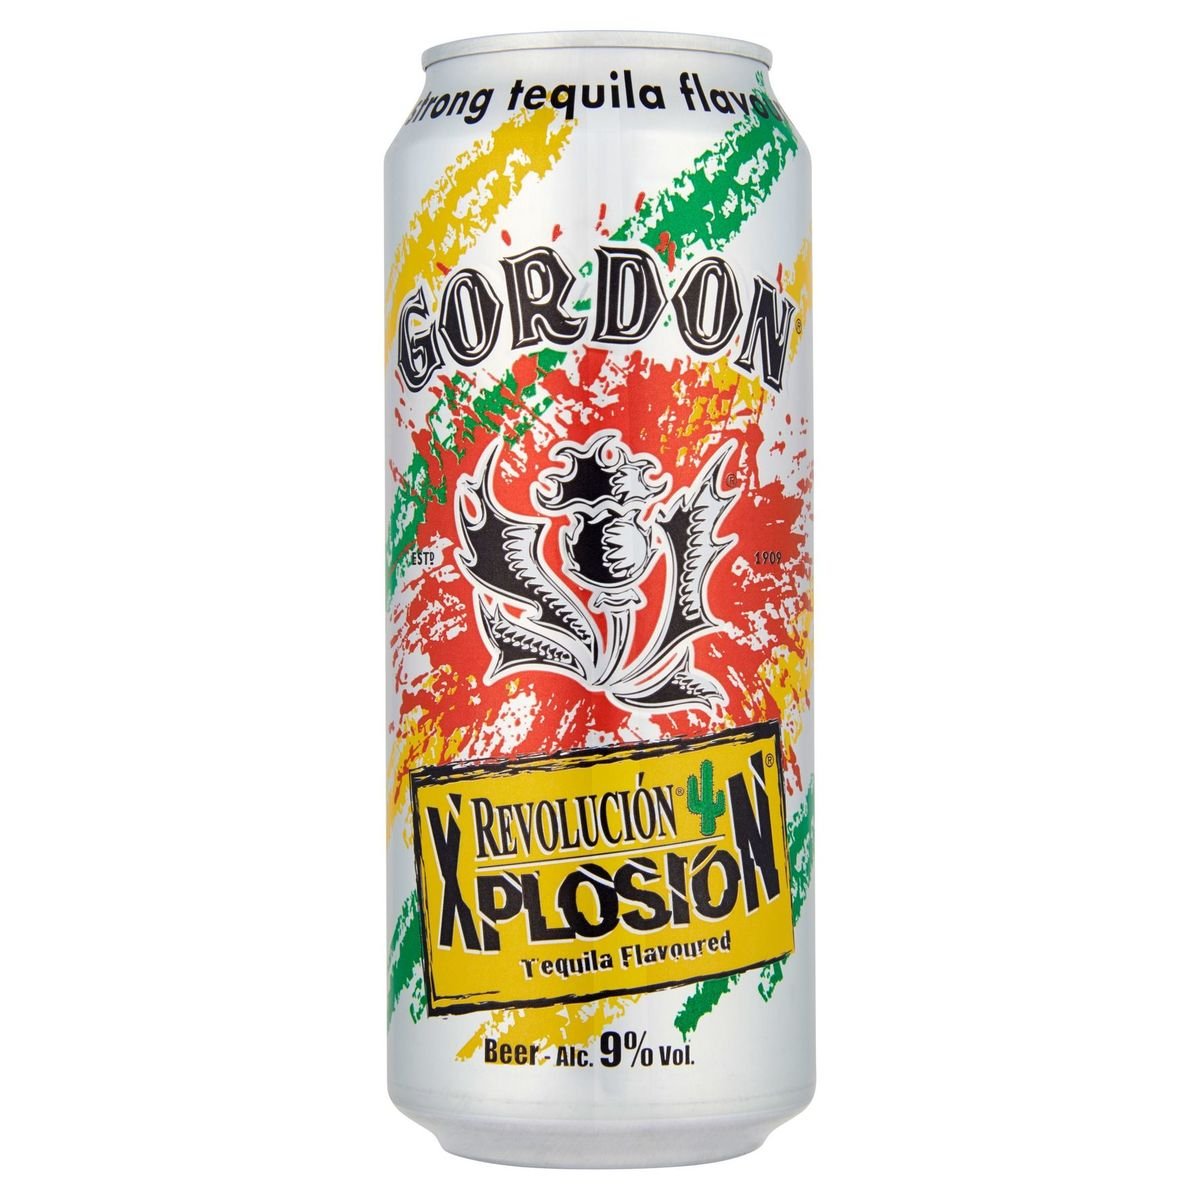 Gordon Revolución Xplosion Tequila Flavoured Beer Canette 50 cl